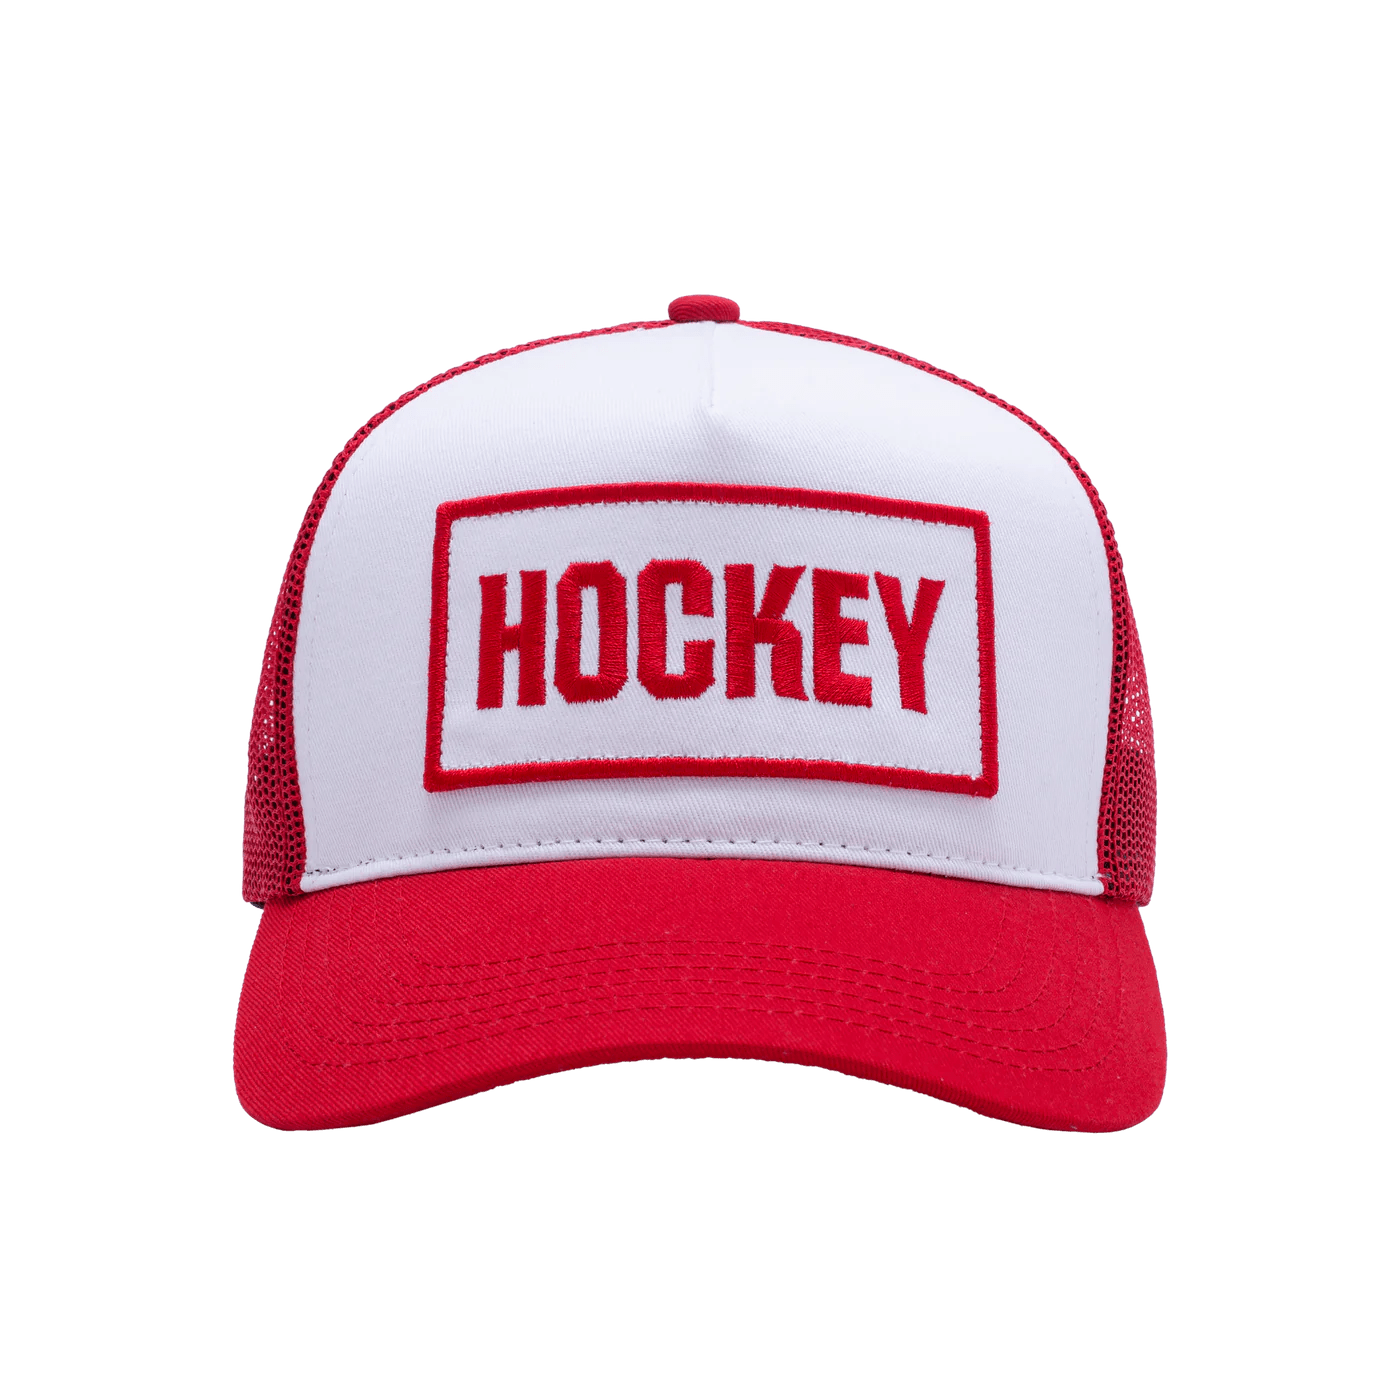 Hockey - Truck Stop Hat - Parliamentskateshop